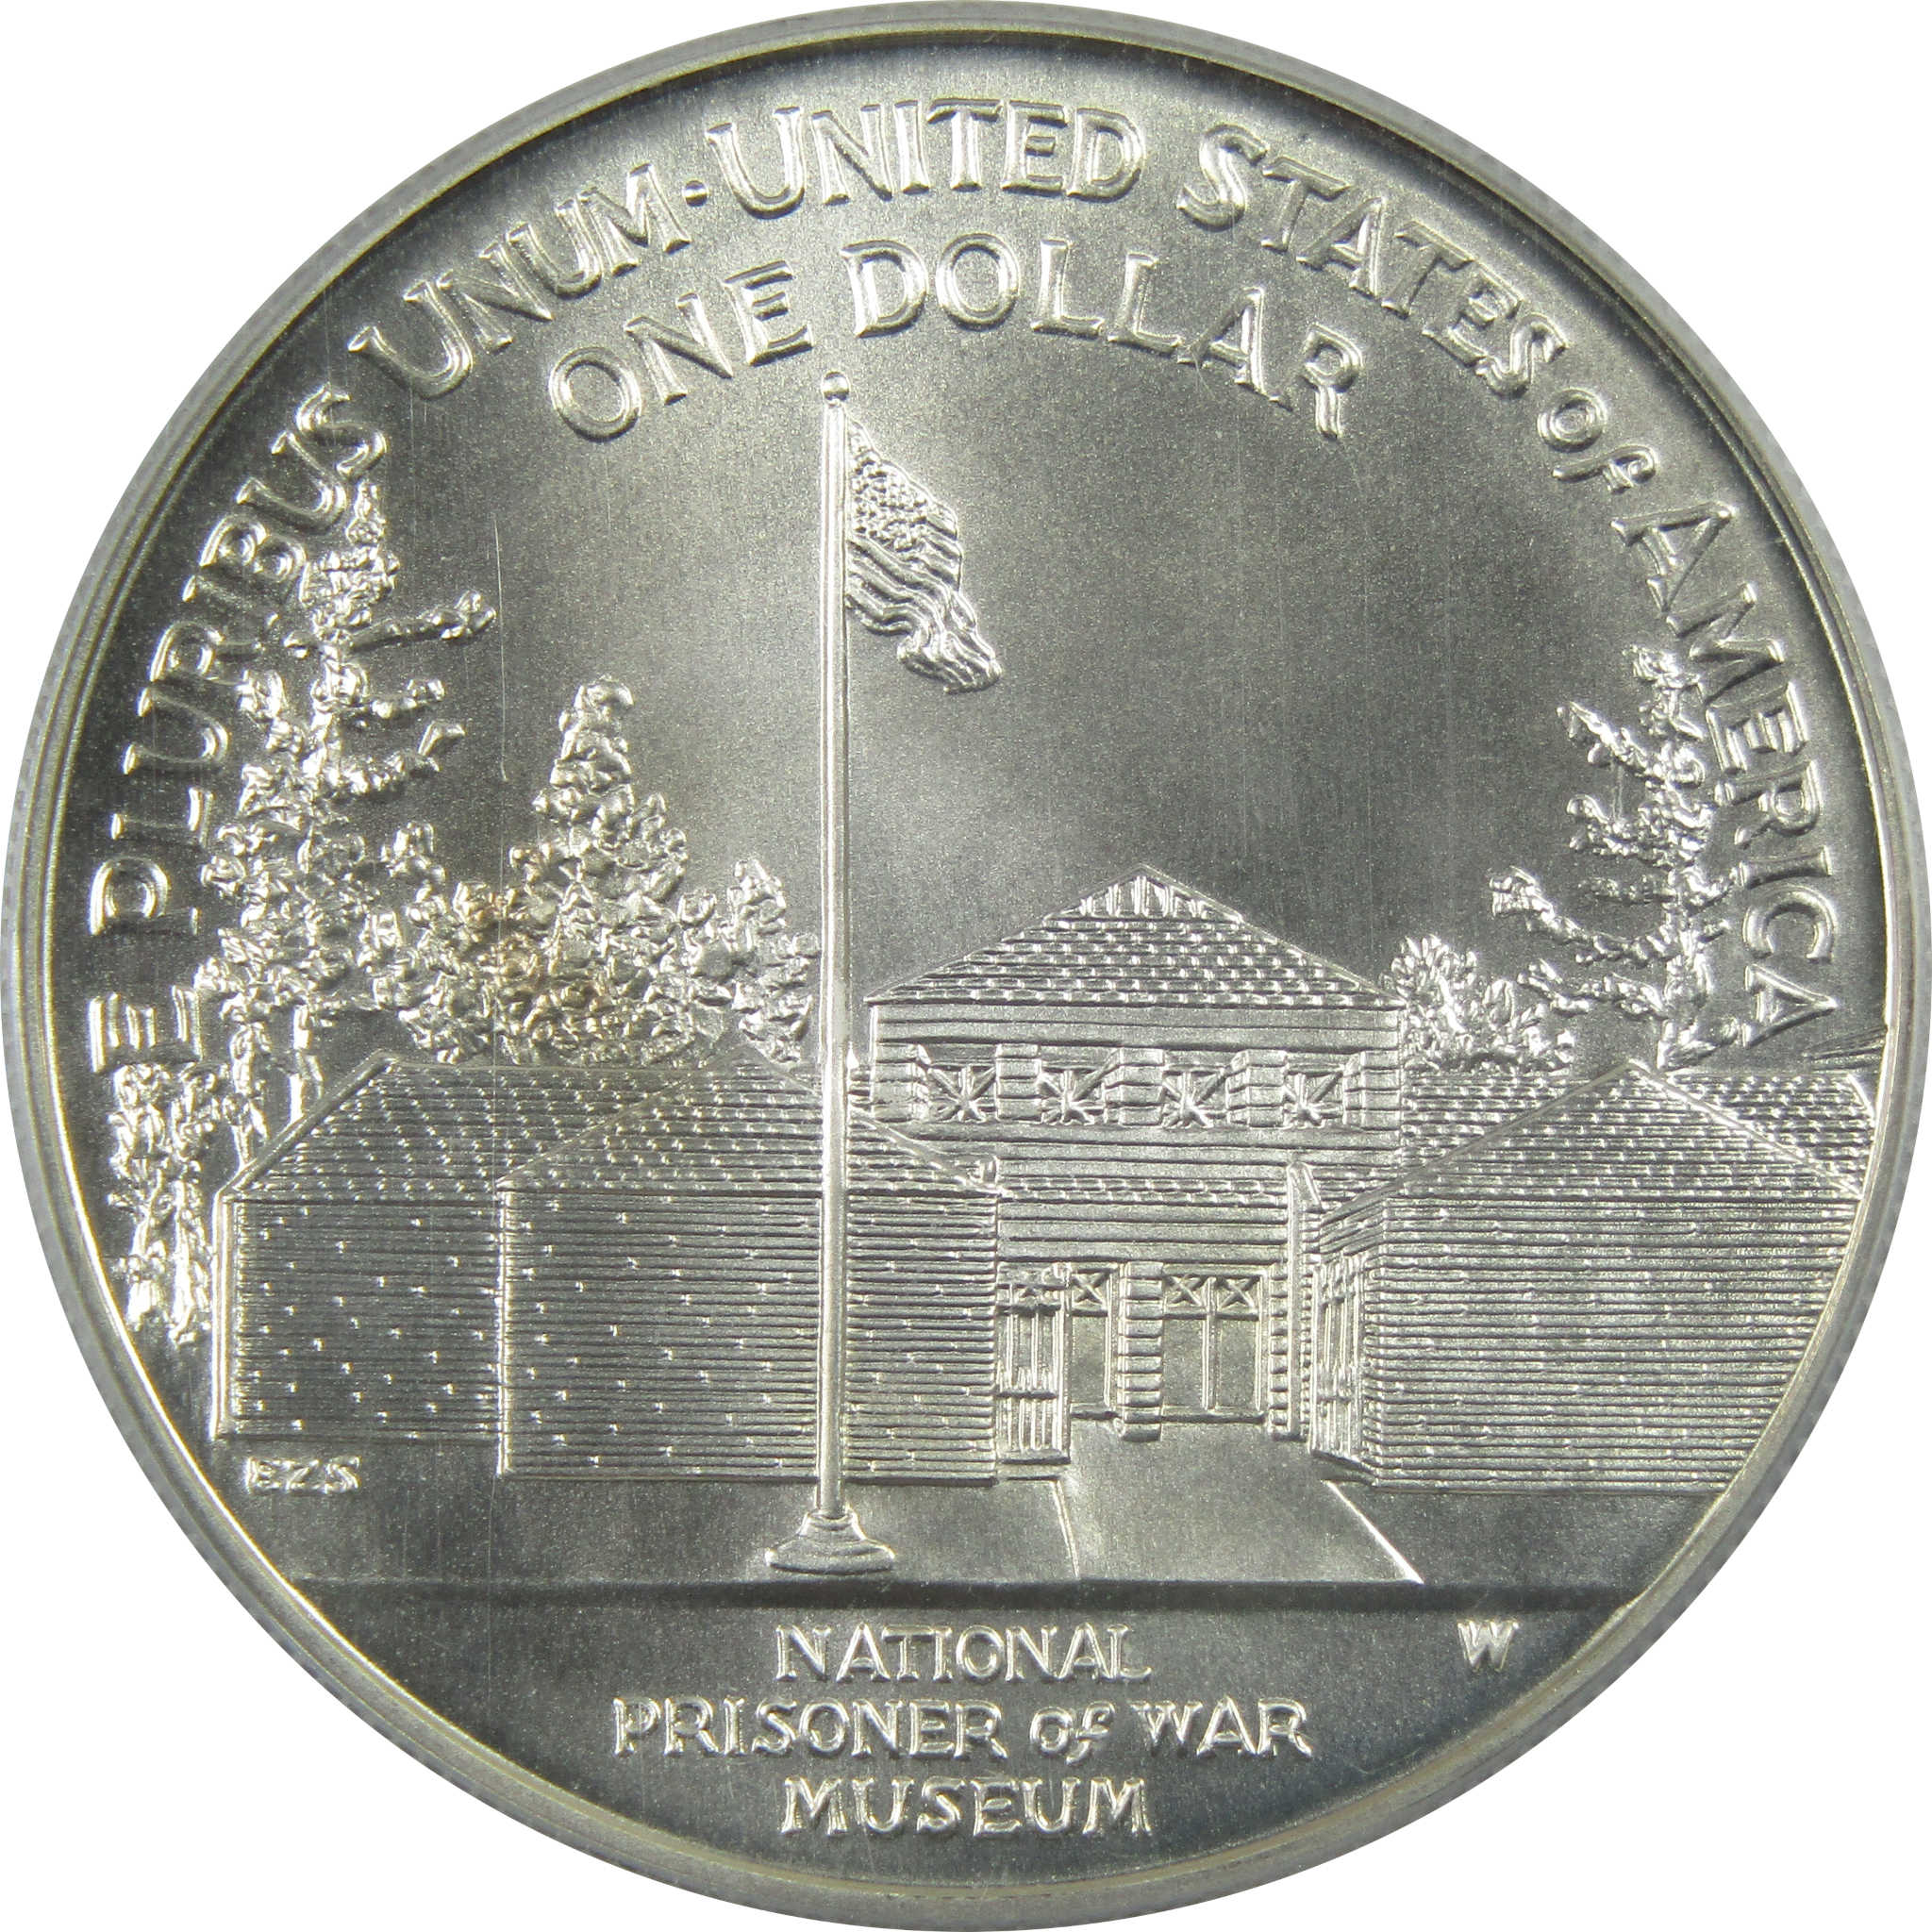 US Prisoner of War Commemorative 1994 W MS69 PCGS Silver $1 SKU:I11669